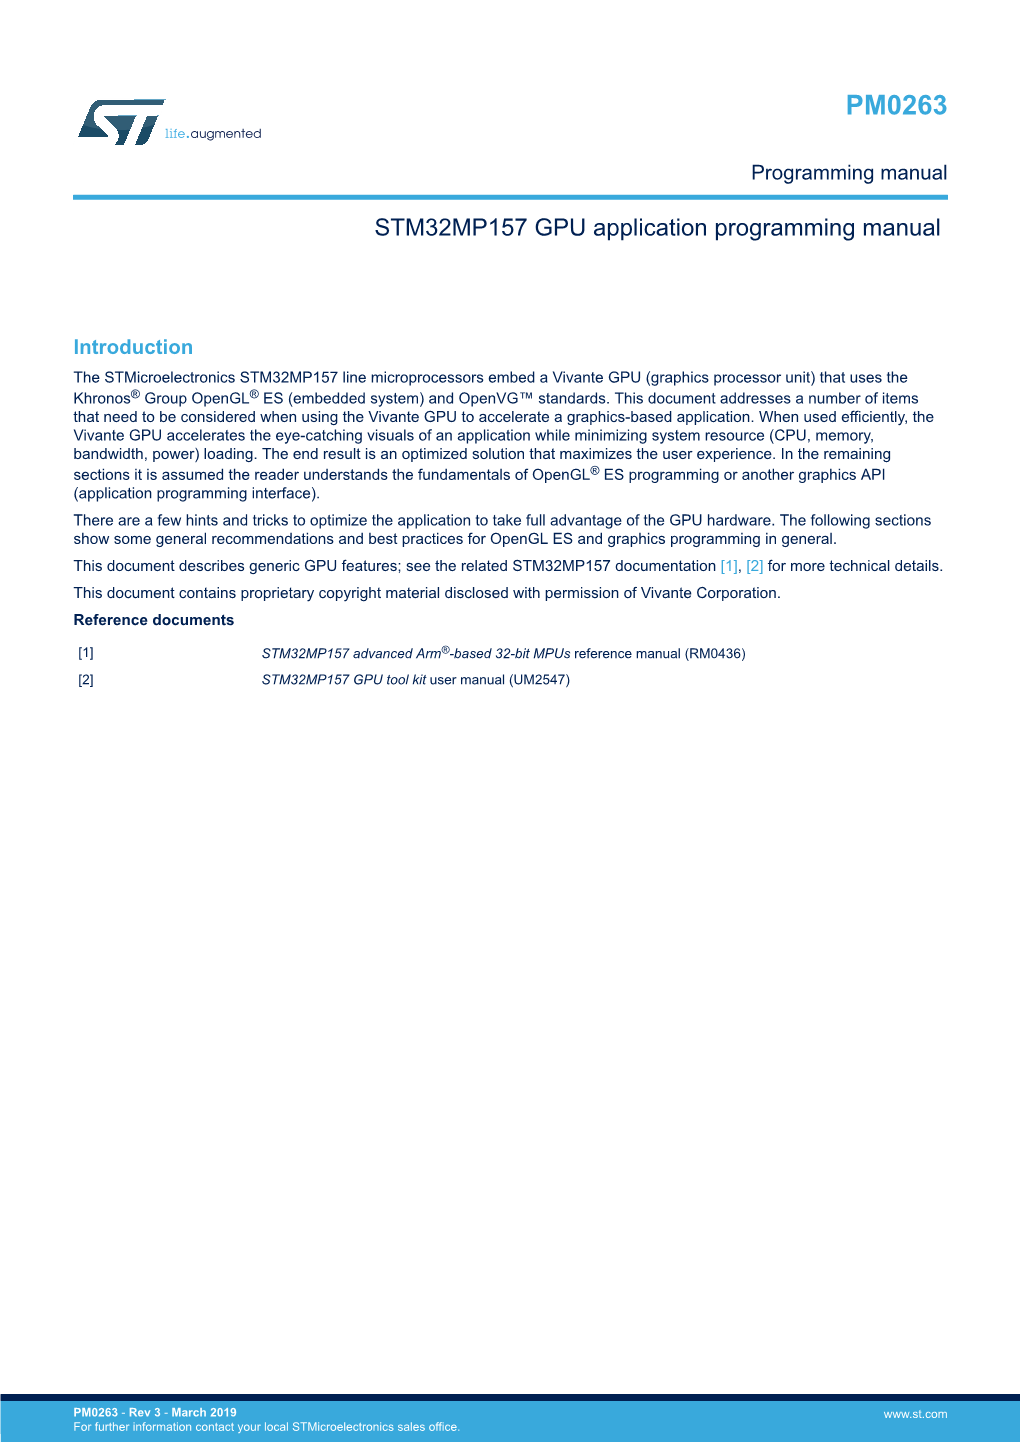 STM32MP157 GPU Application Programming Manual